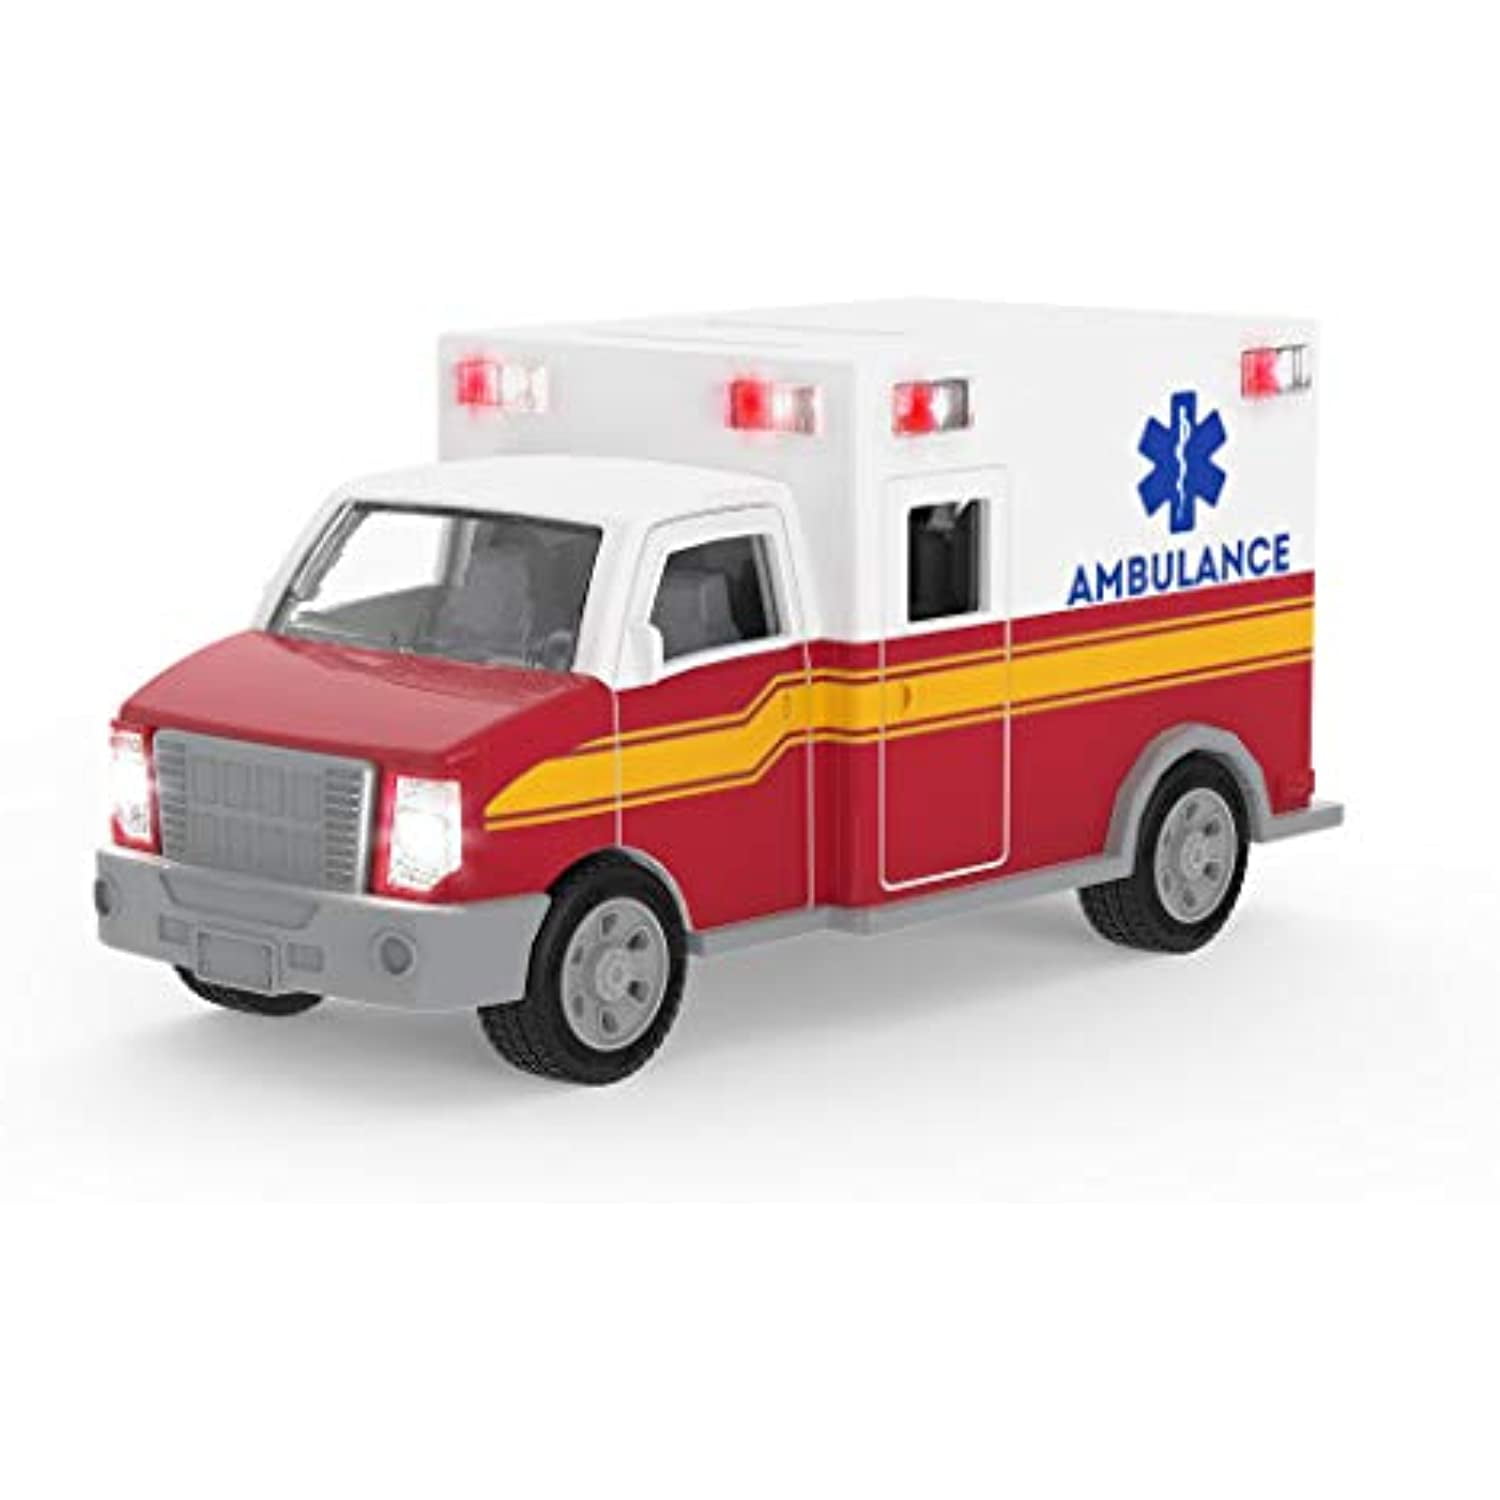 R/C Midrange Ambulance, DRIVEN